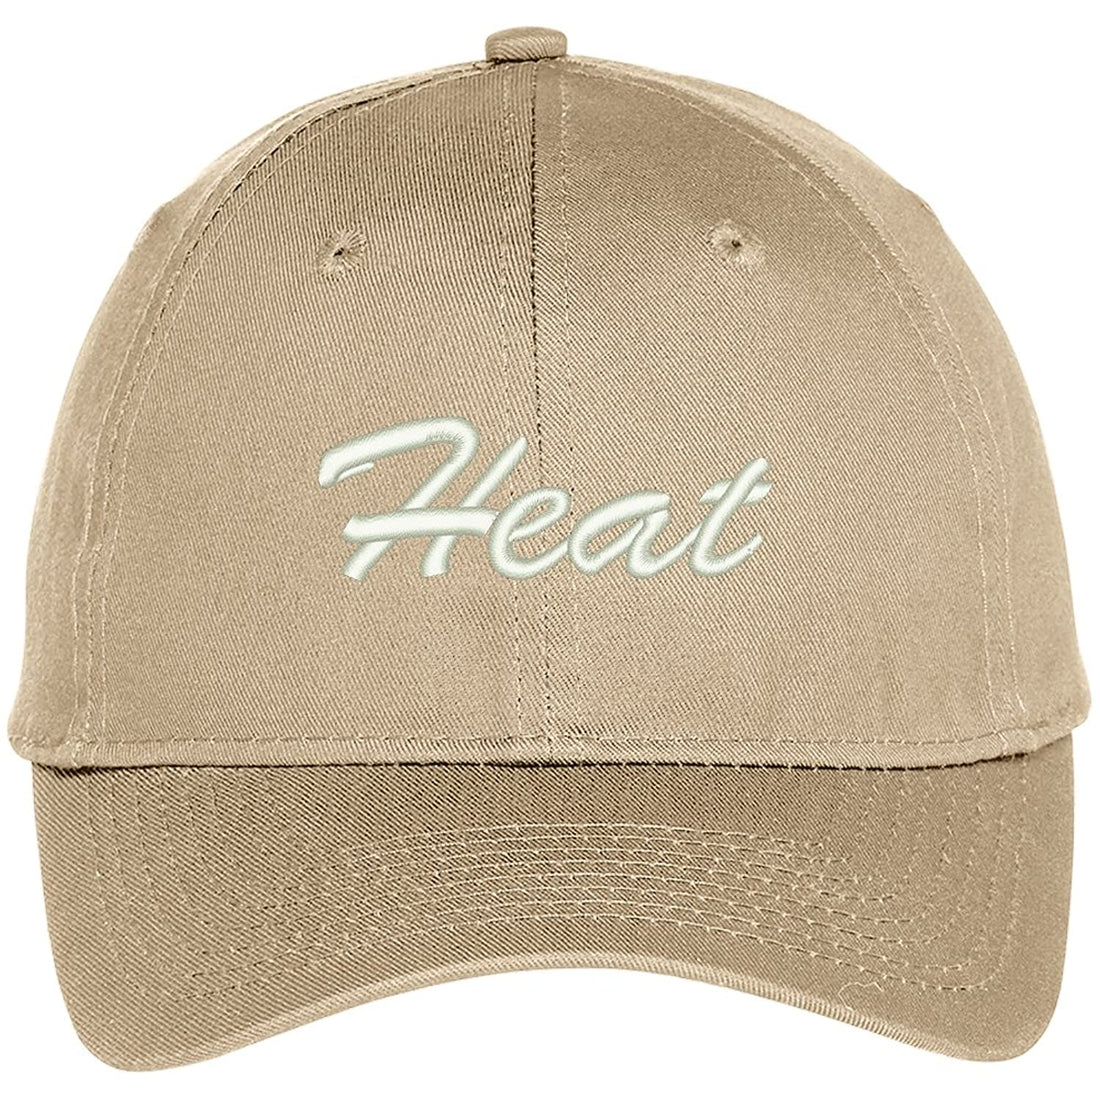 Trendy Apparel Shop Heat Embroidered Precurved Adjustable Cap